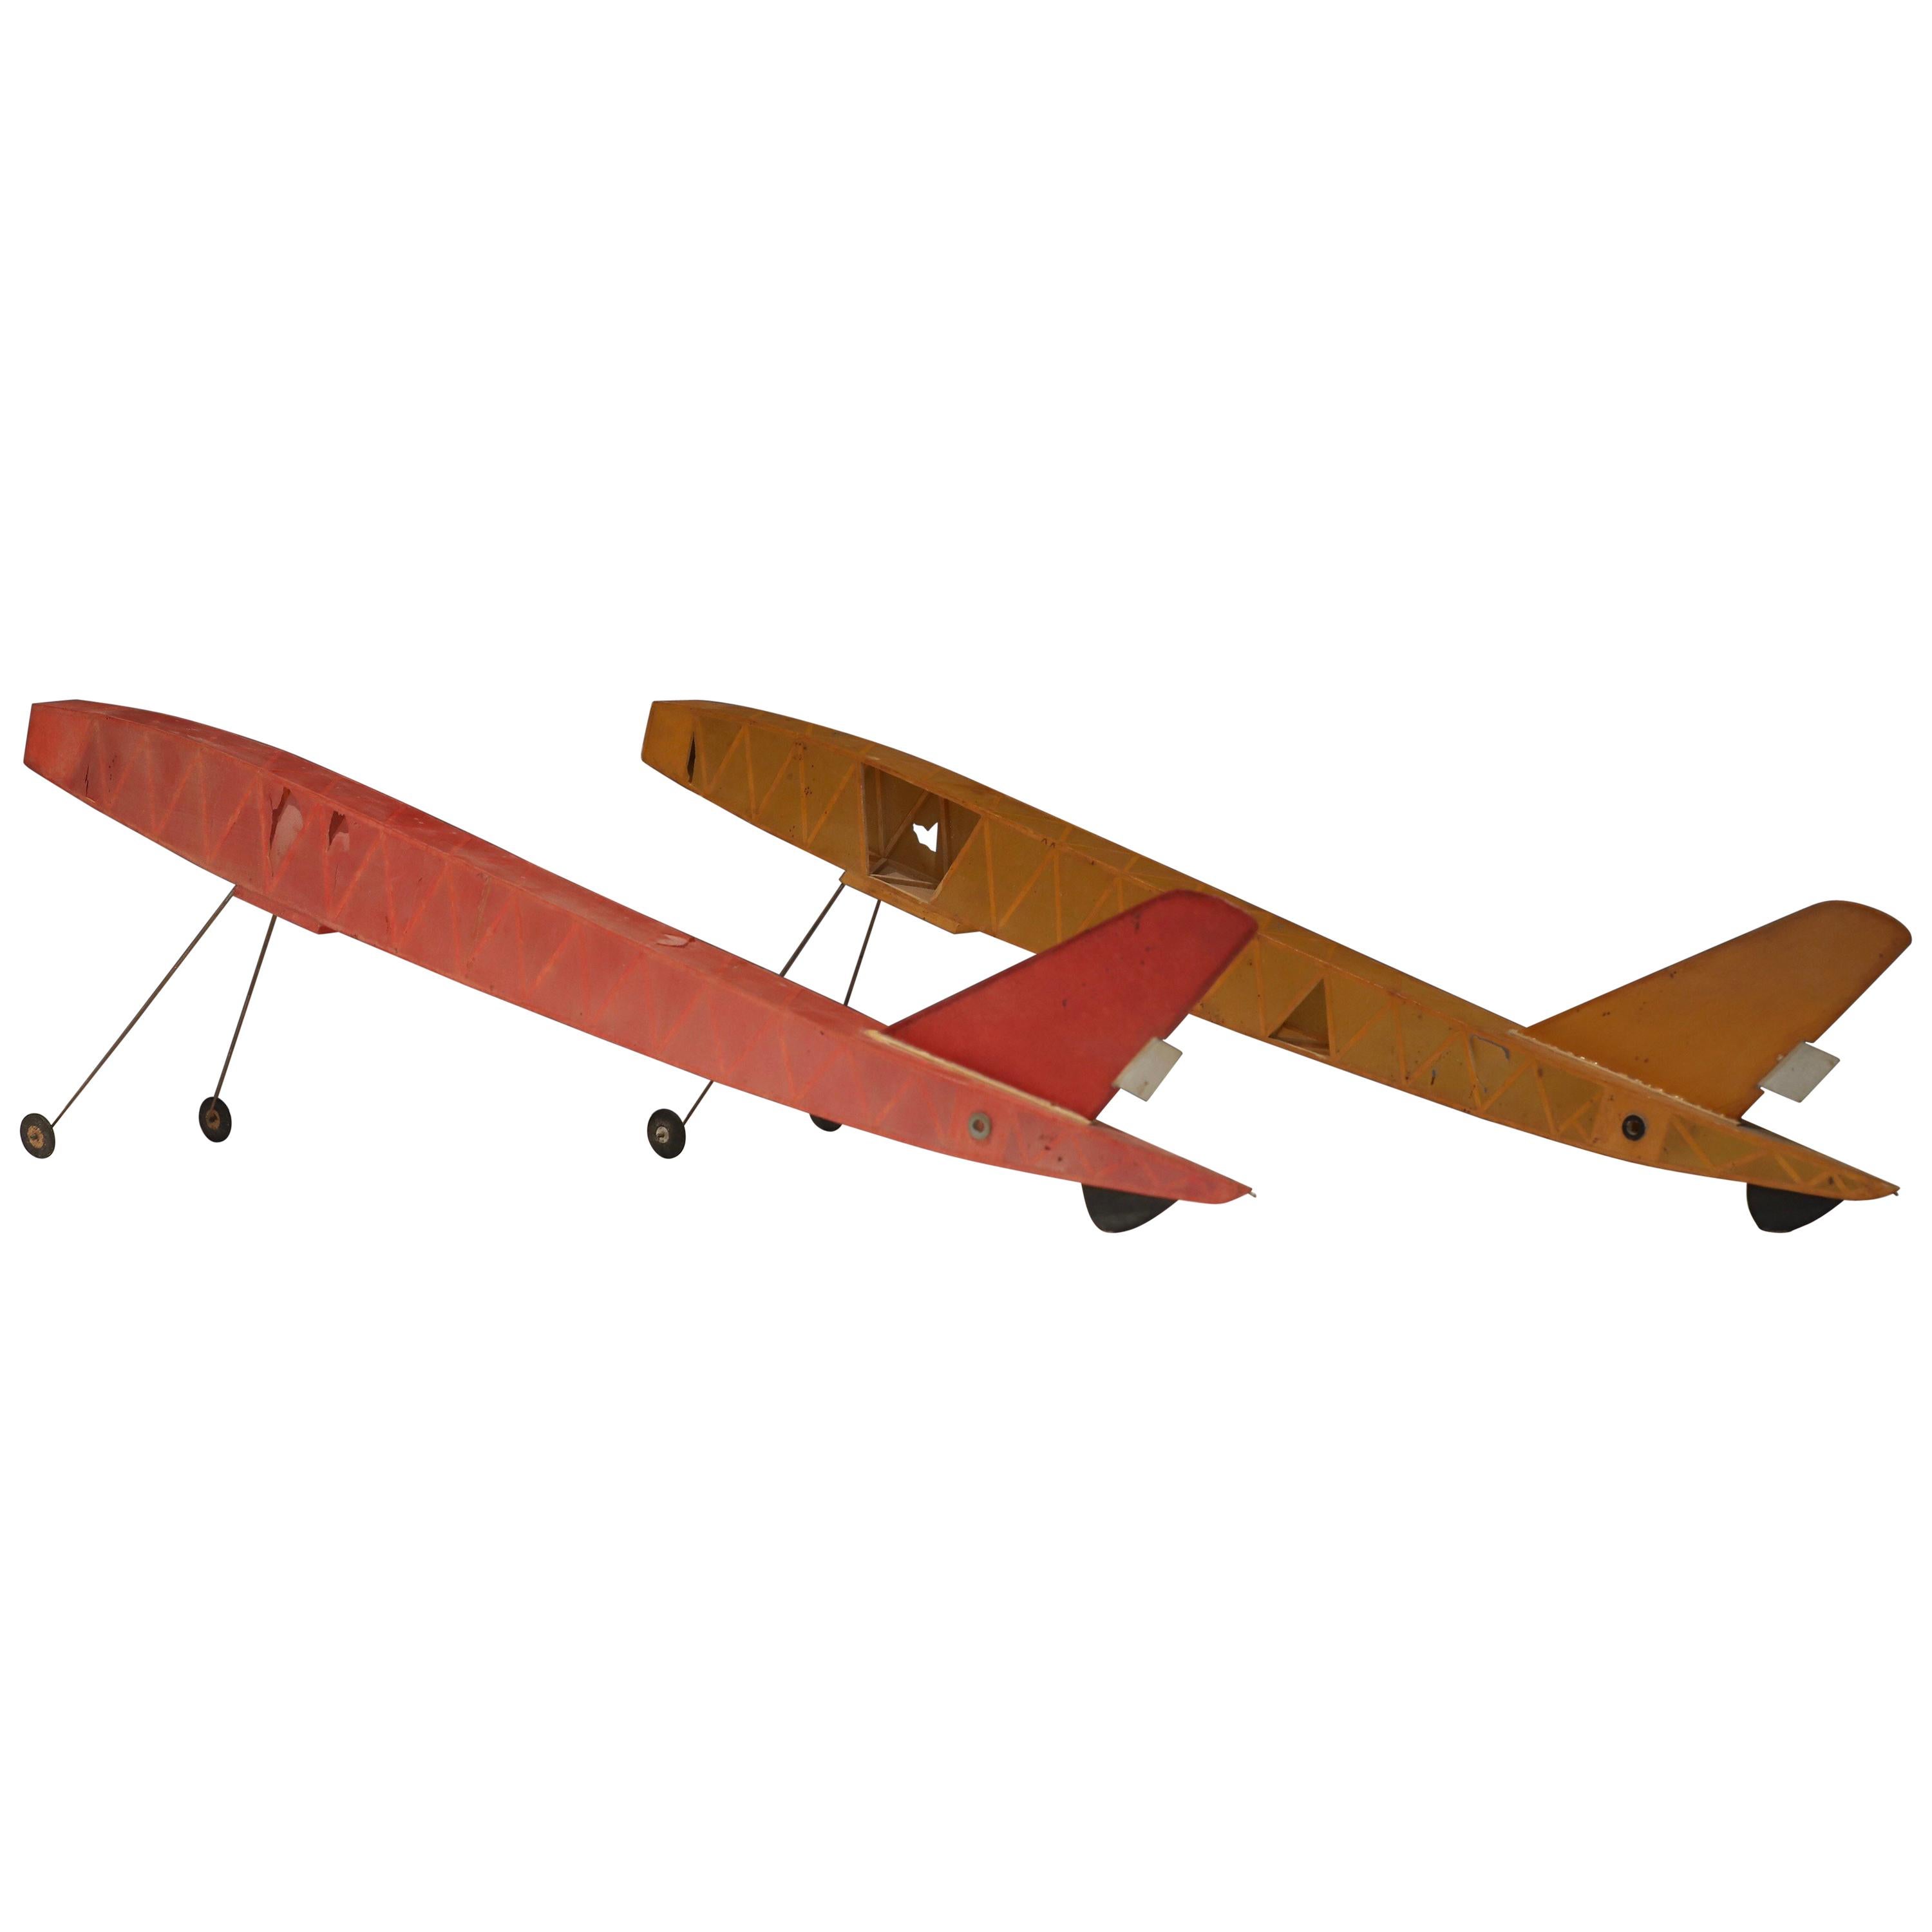 Handmade Model Airplanes